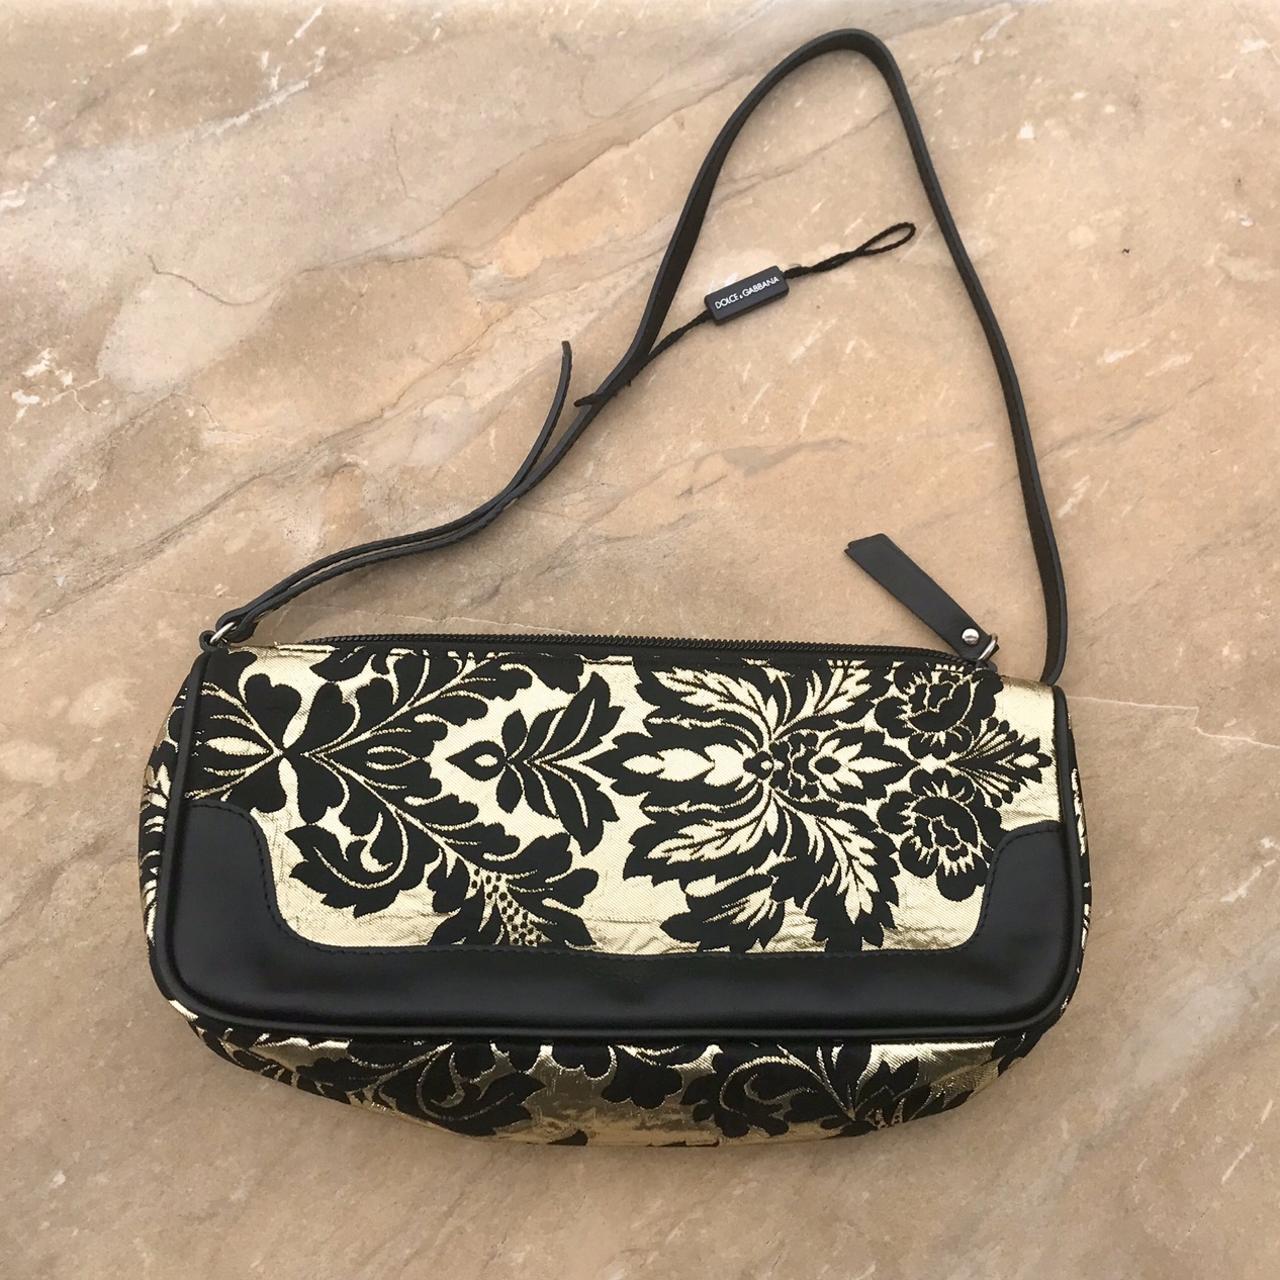 Dolce&Gabbana Black Sicily handbag | TheDoubleF